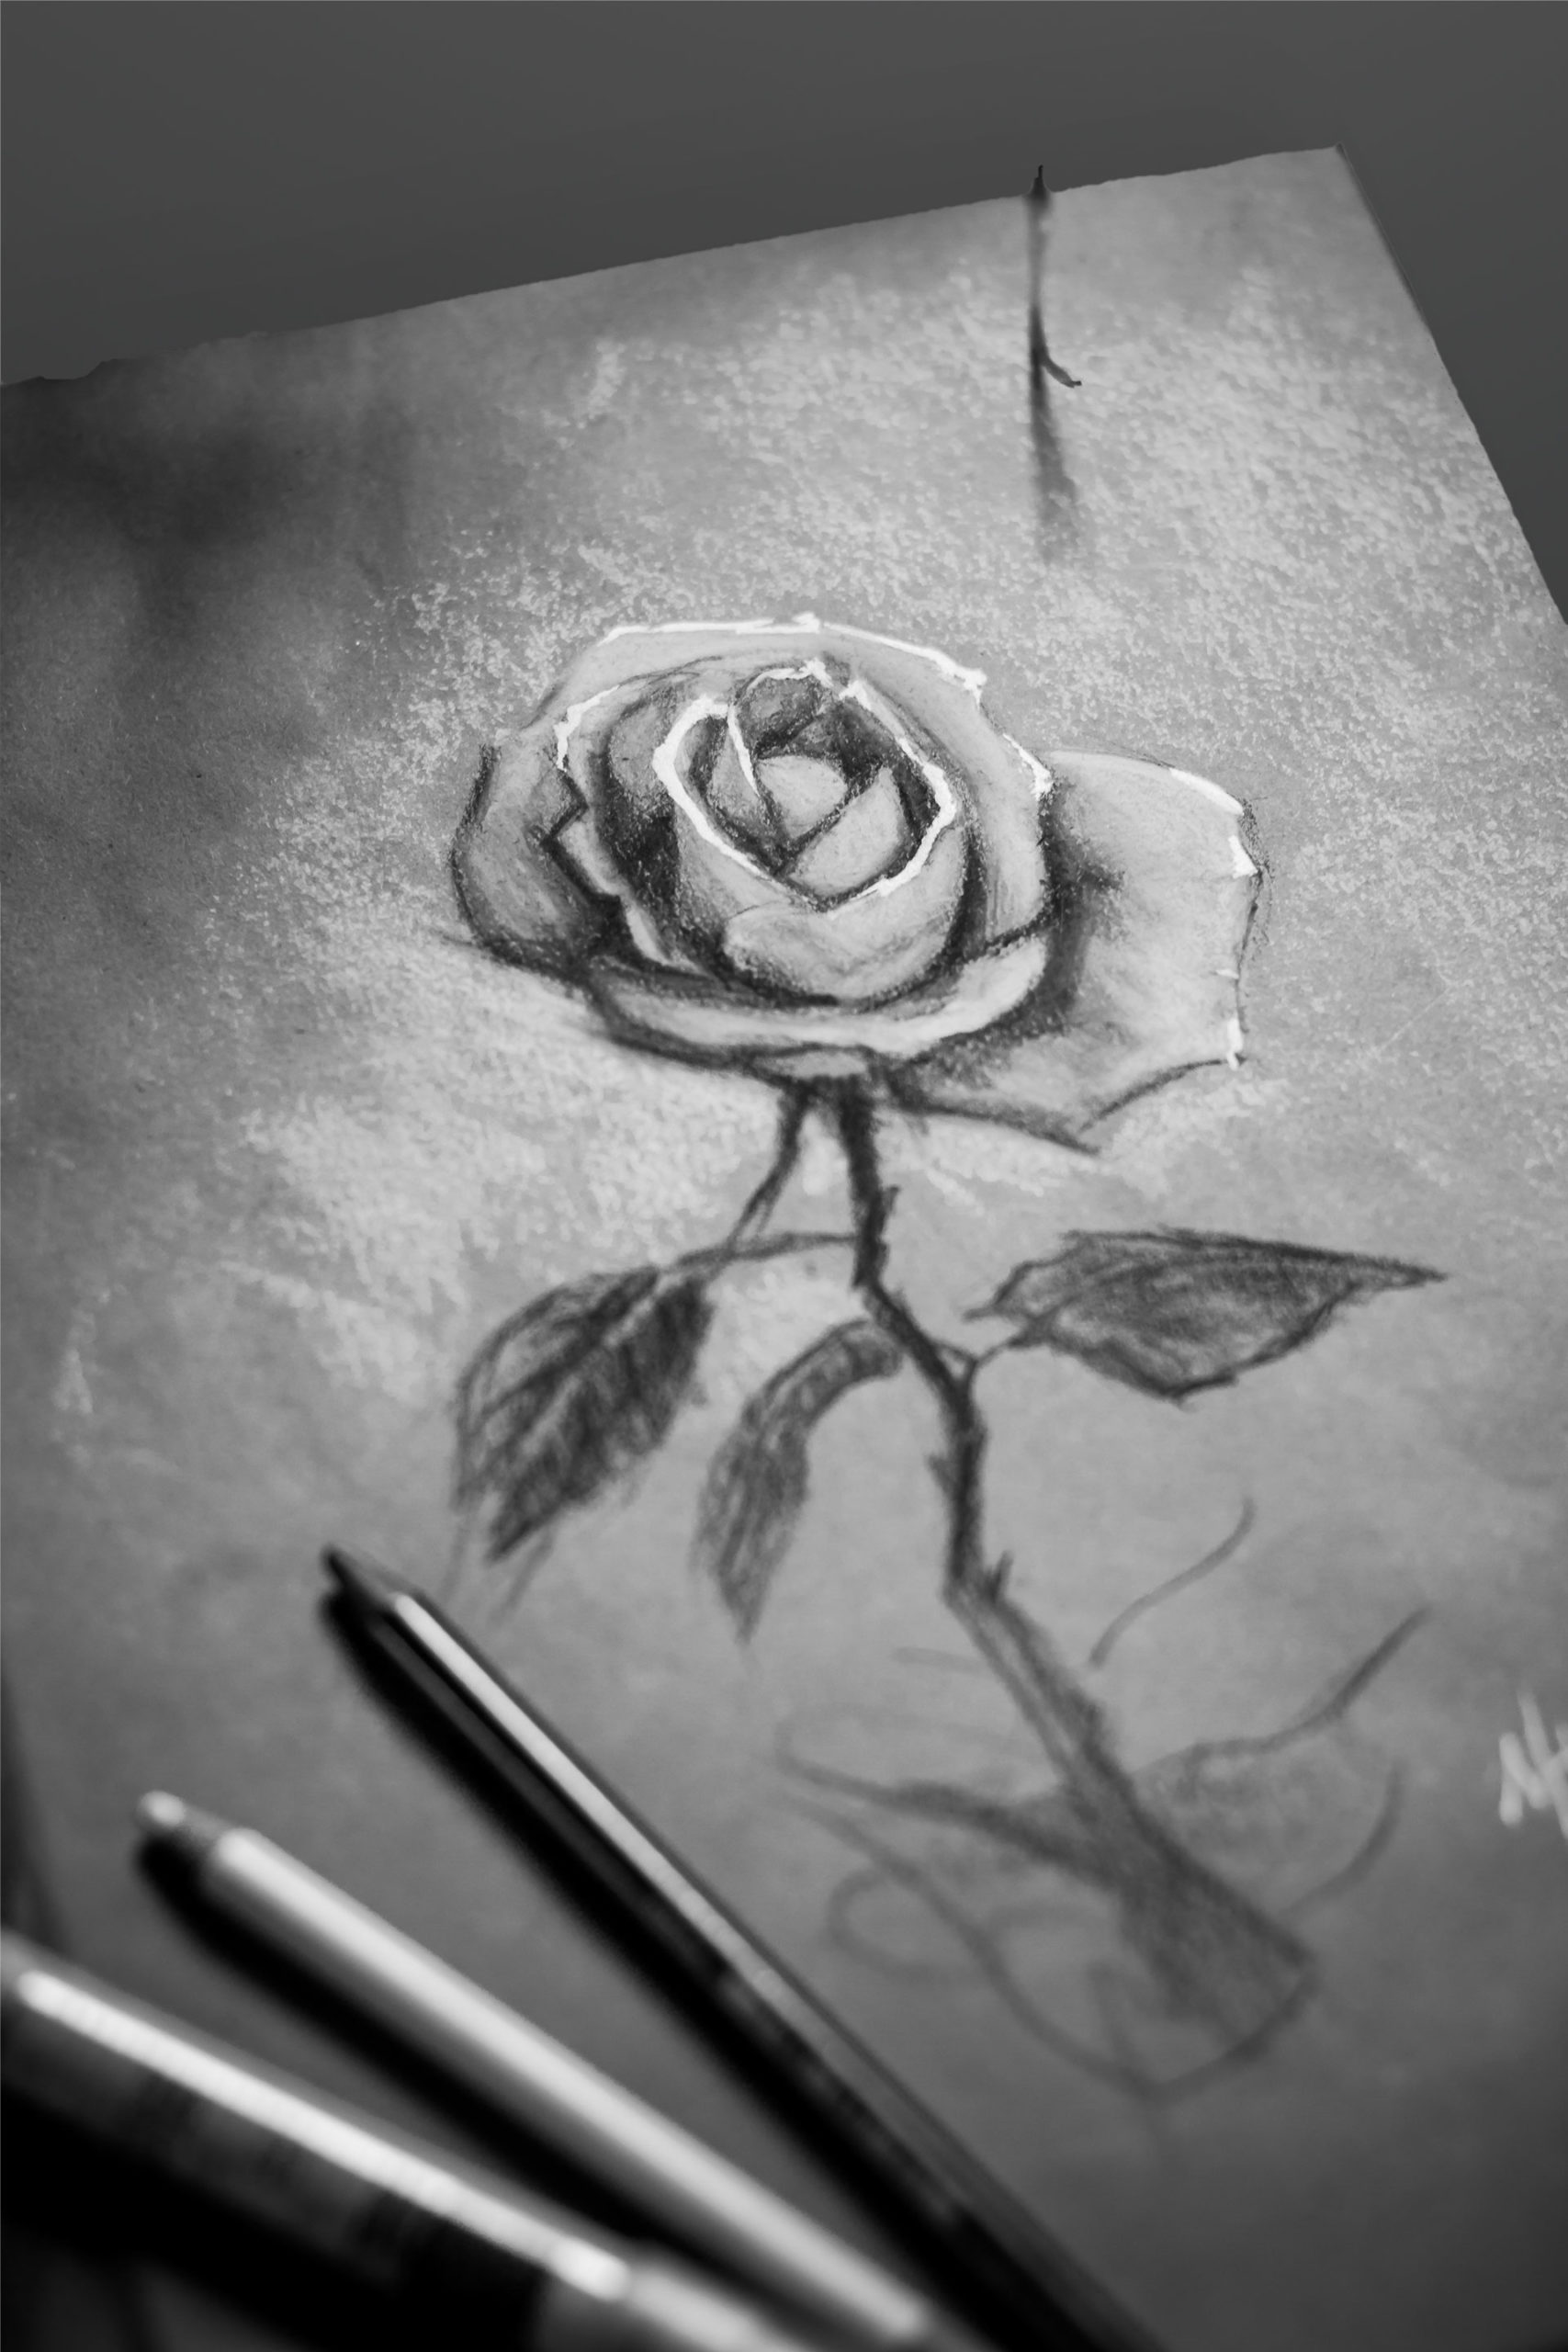 Sketch of a rose